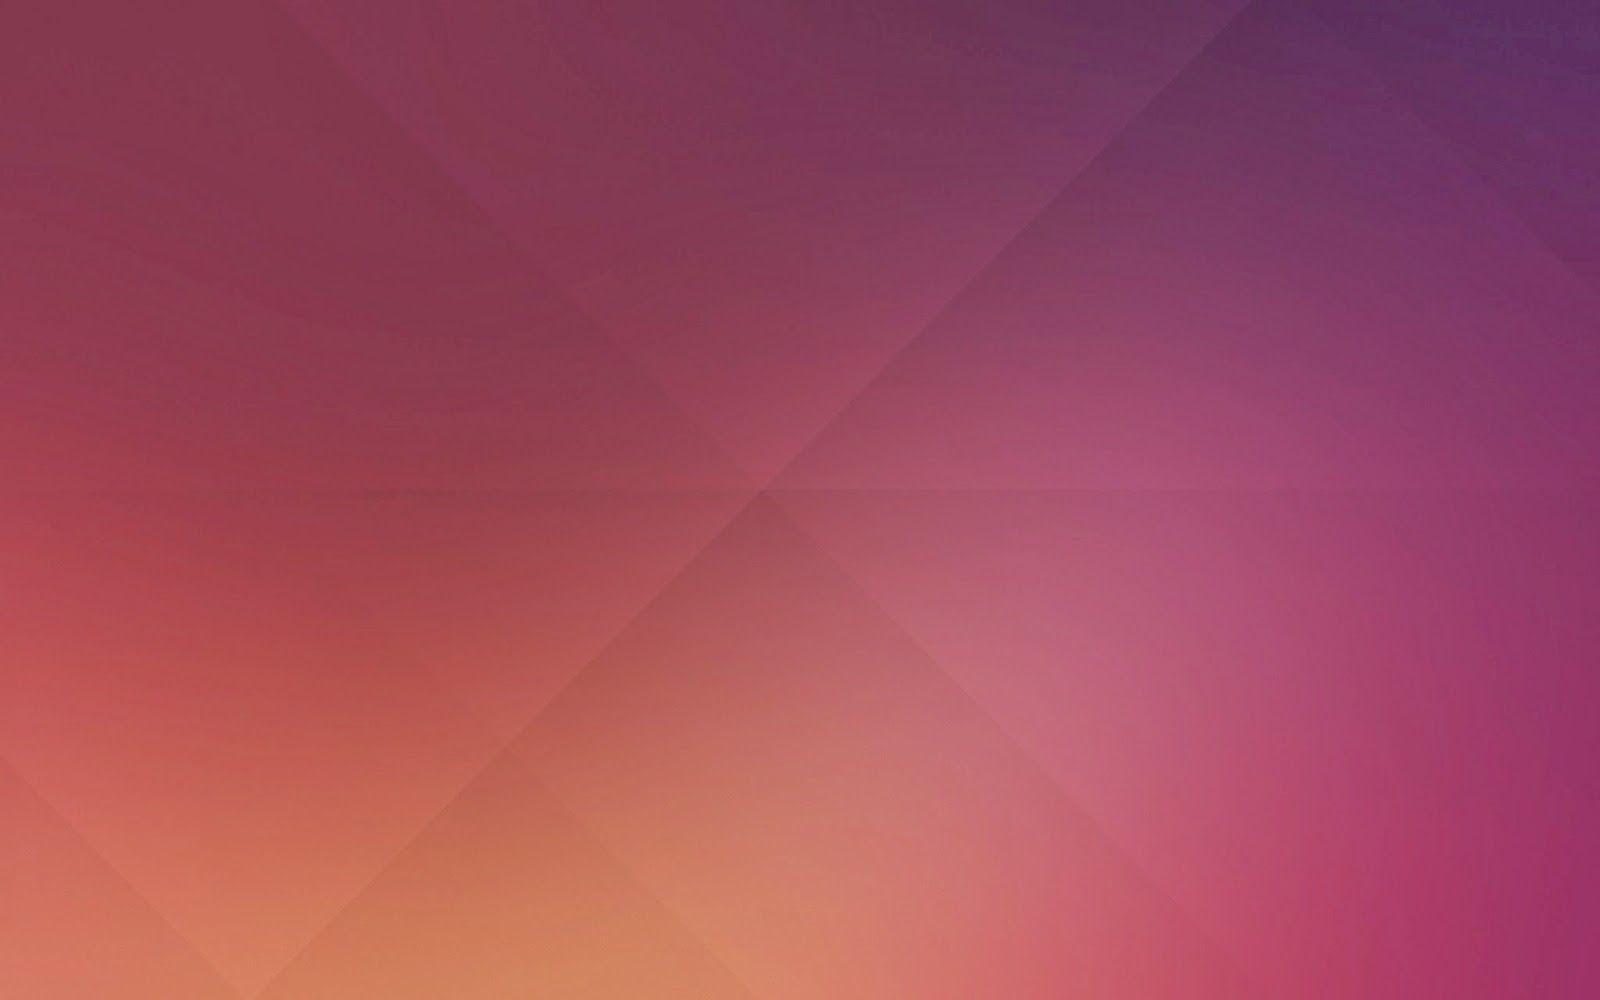 Ubuntu 14.04 LTS all set for release: Chosen Wallpaper Revealed